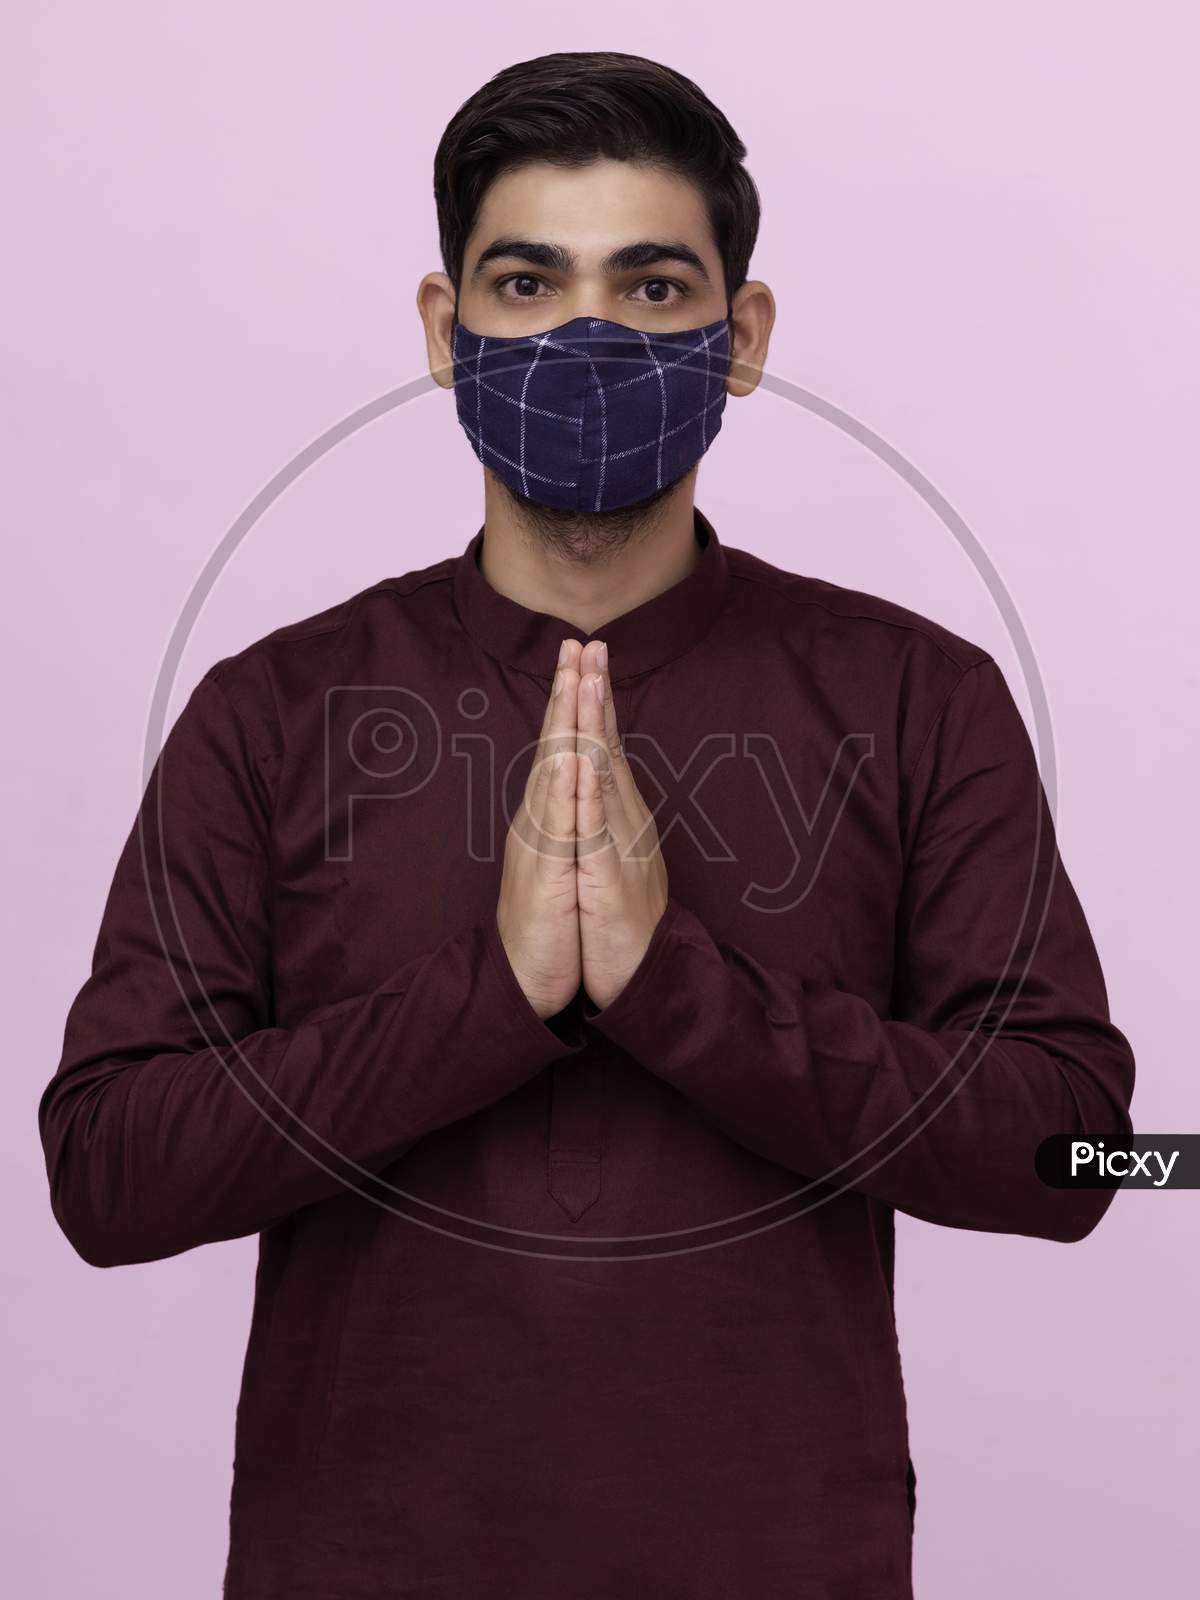 Indian Man Namaste Gesture With Mask.